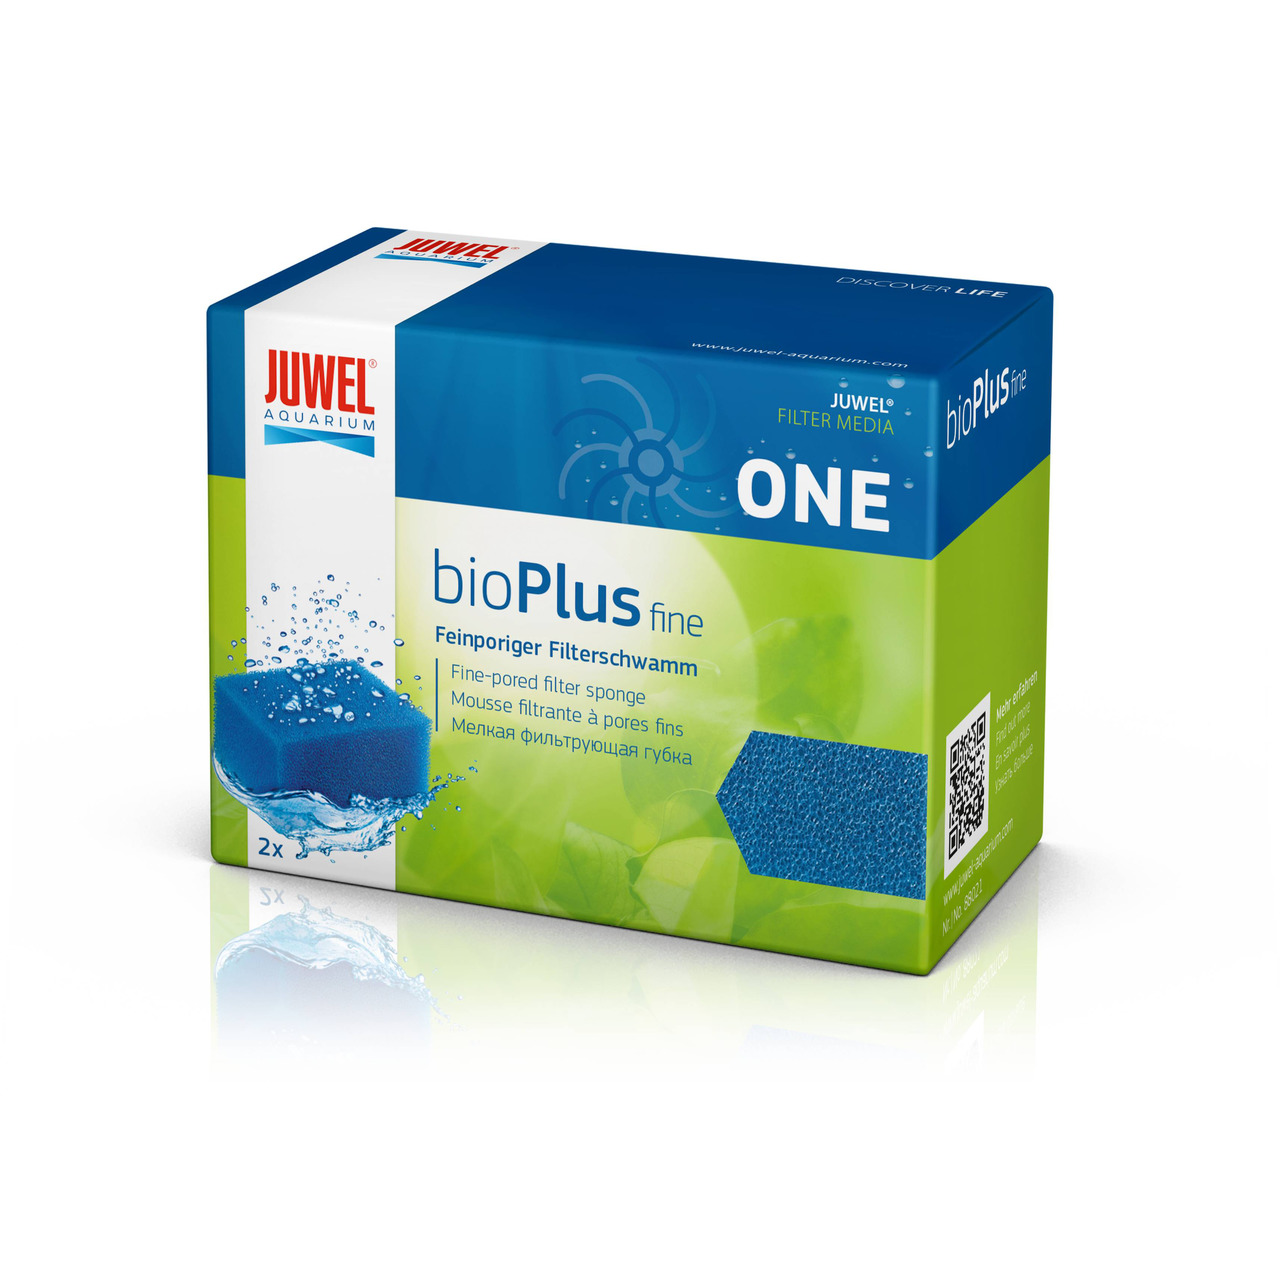 Juwel bioPlus fine Filterschwamm Aquarium Filtermedium One